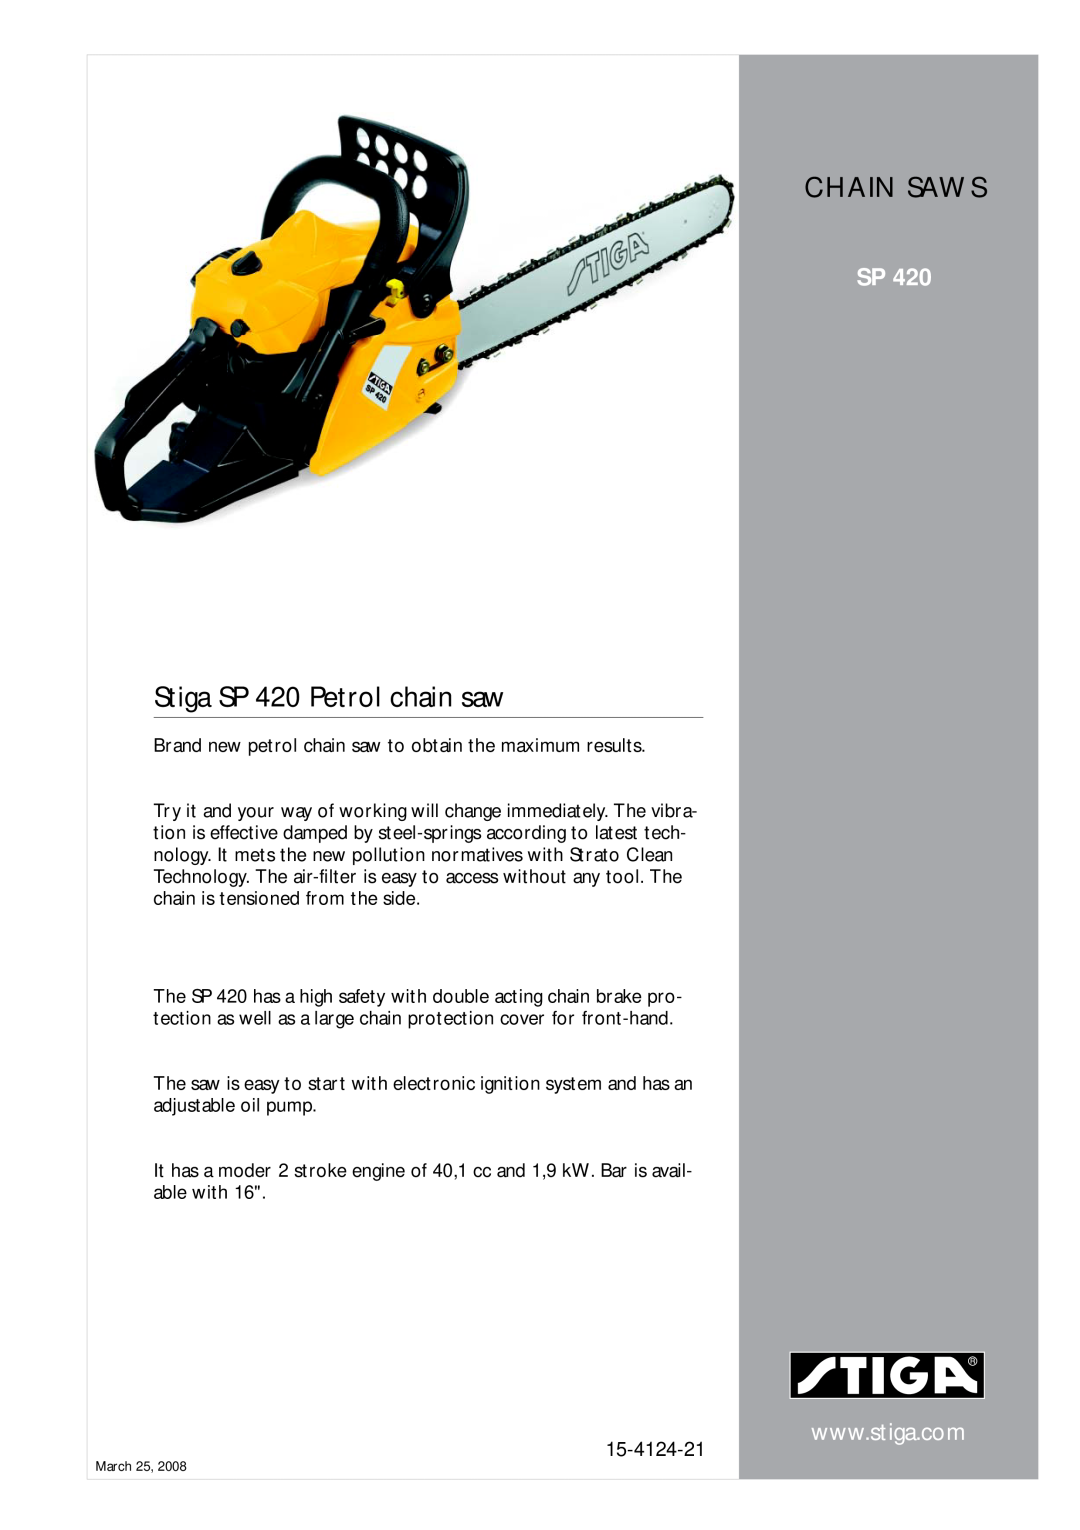 Stiga manual Chain Saws, Stiga SP 420 Petrol chain saw, 15-4124-21 